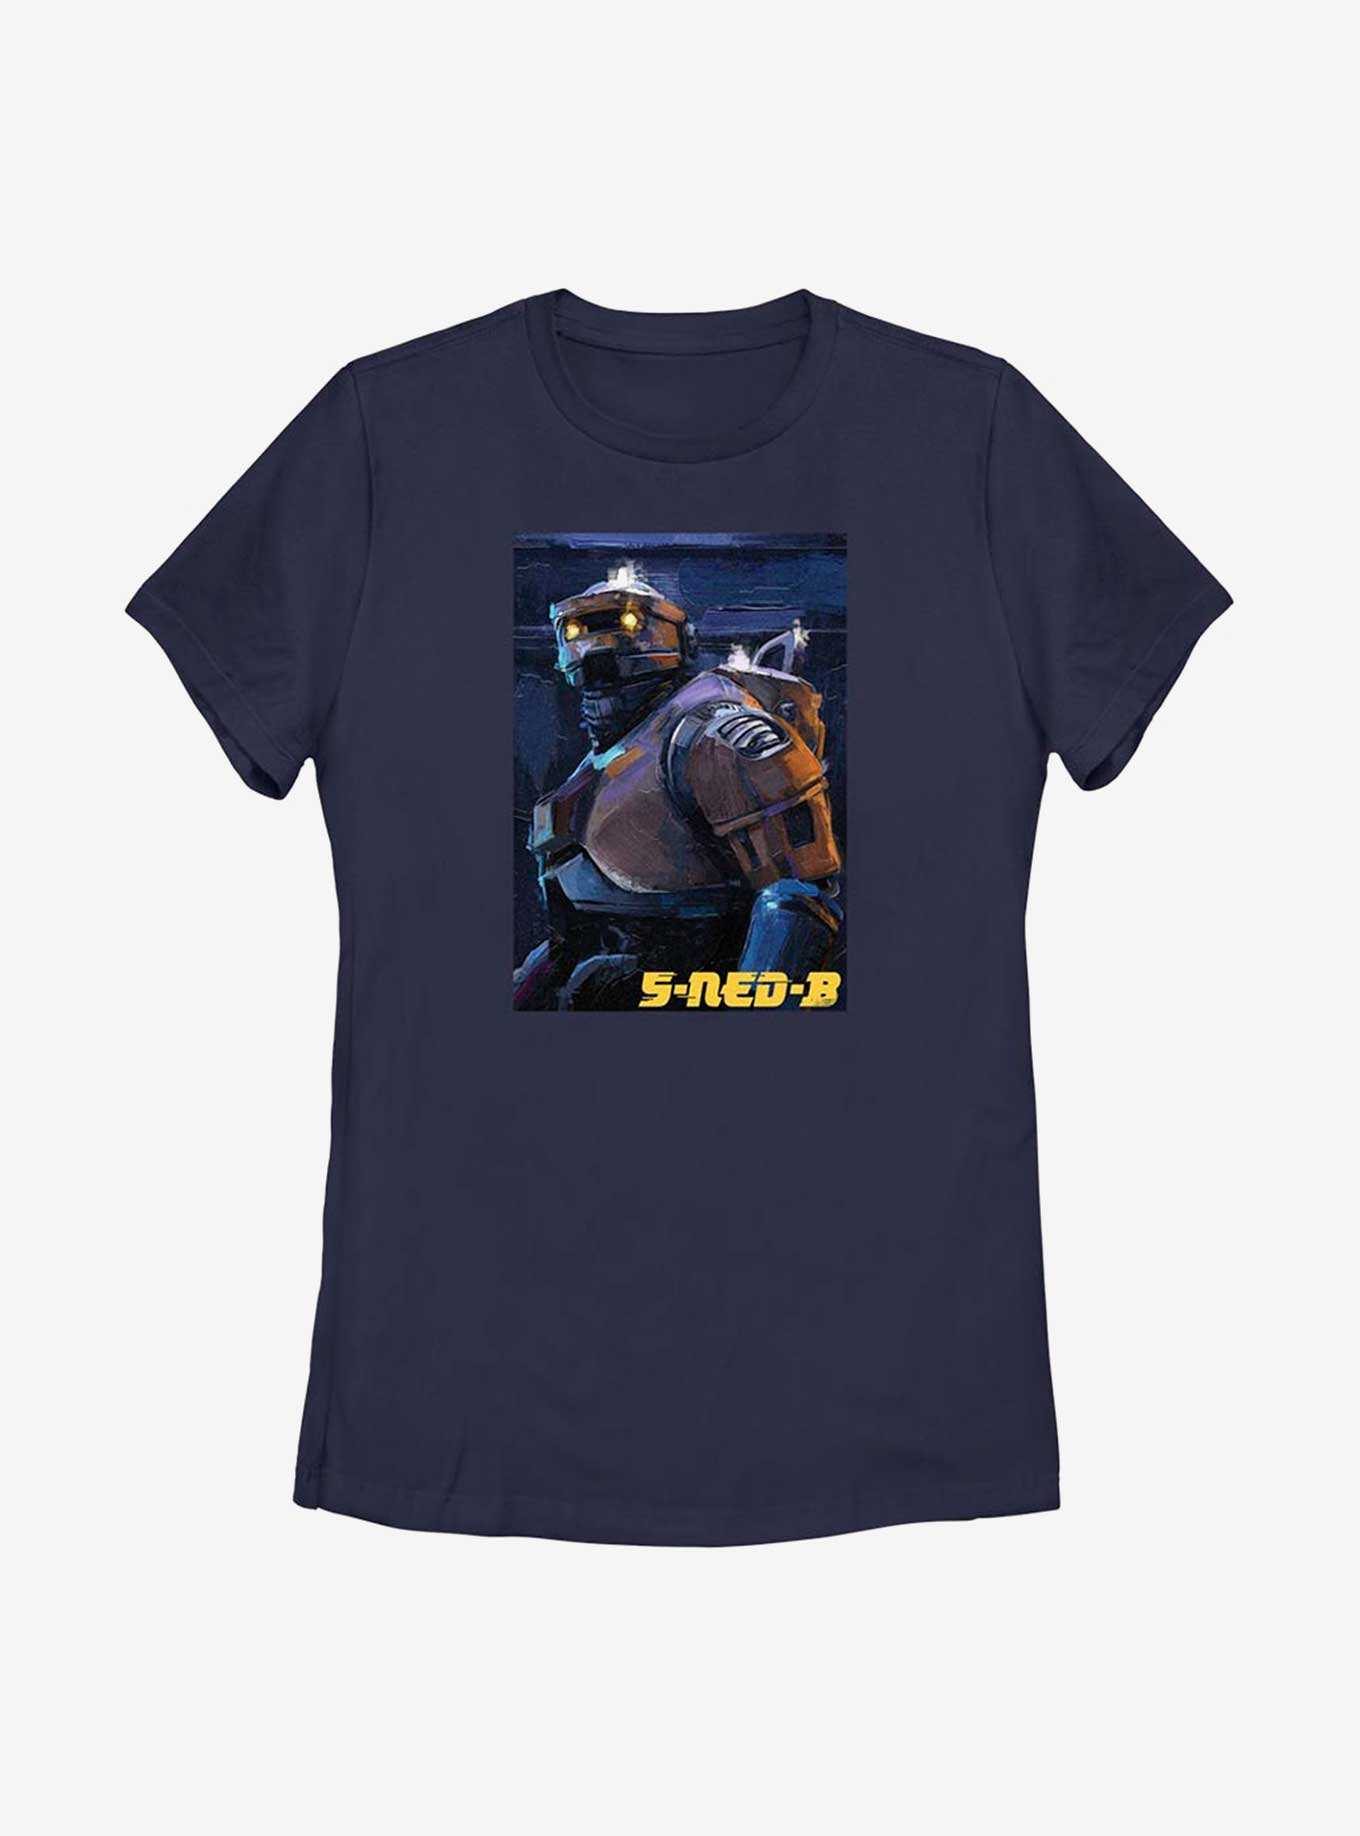 Star Wars Obi-Wan Kenobi 5-NED-B Painting Womens T-Shirt, , hi-res